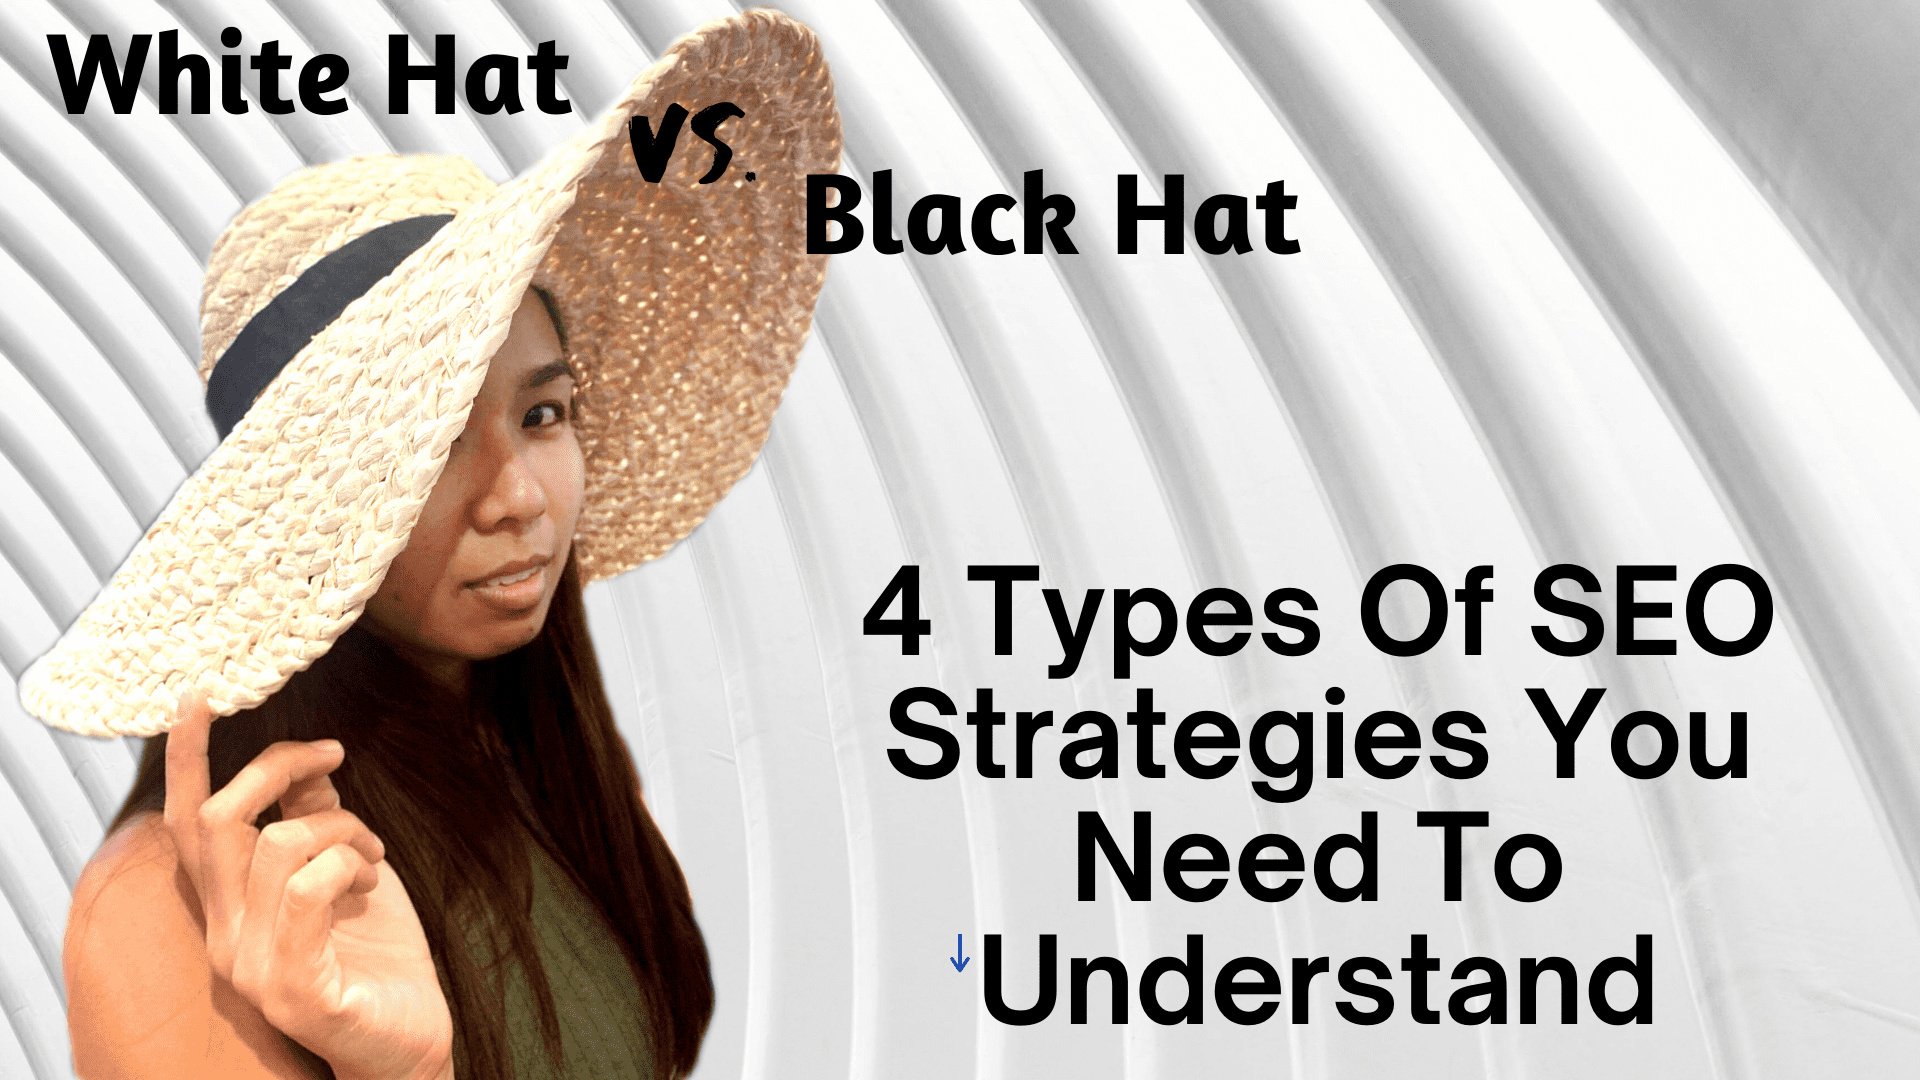 4 Types Of SEO Strategies - White Hat vs. Black Hat